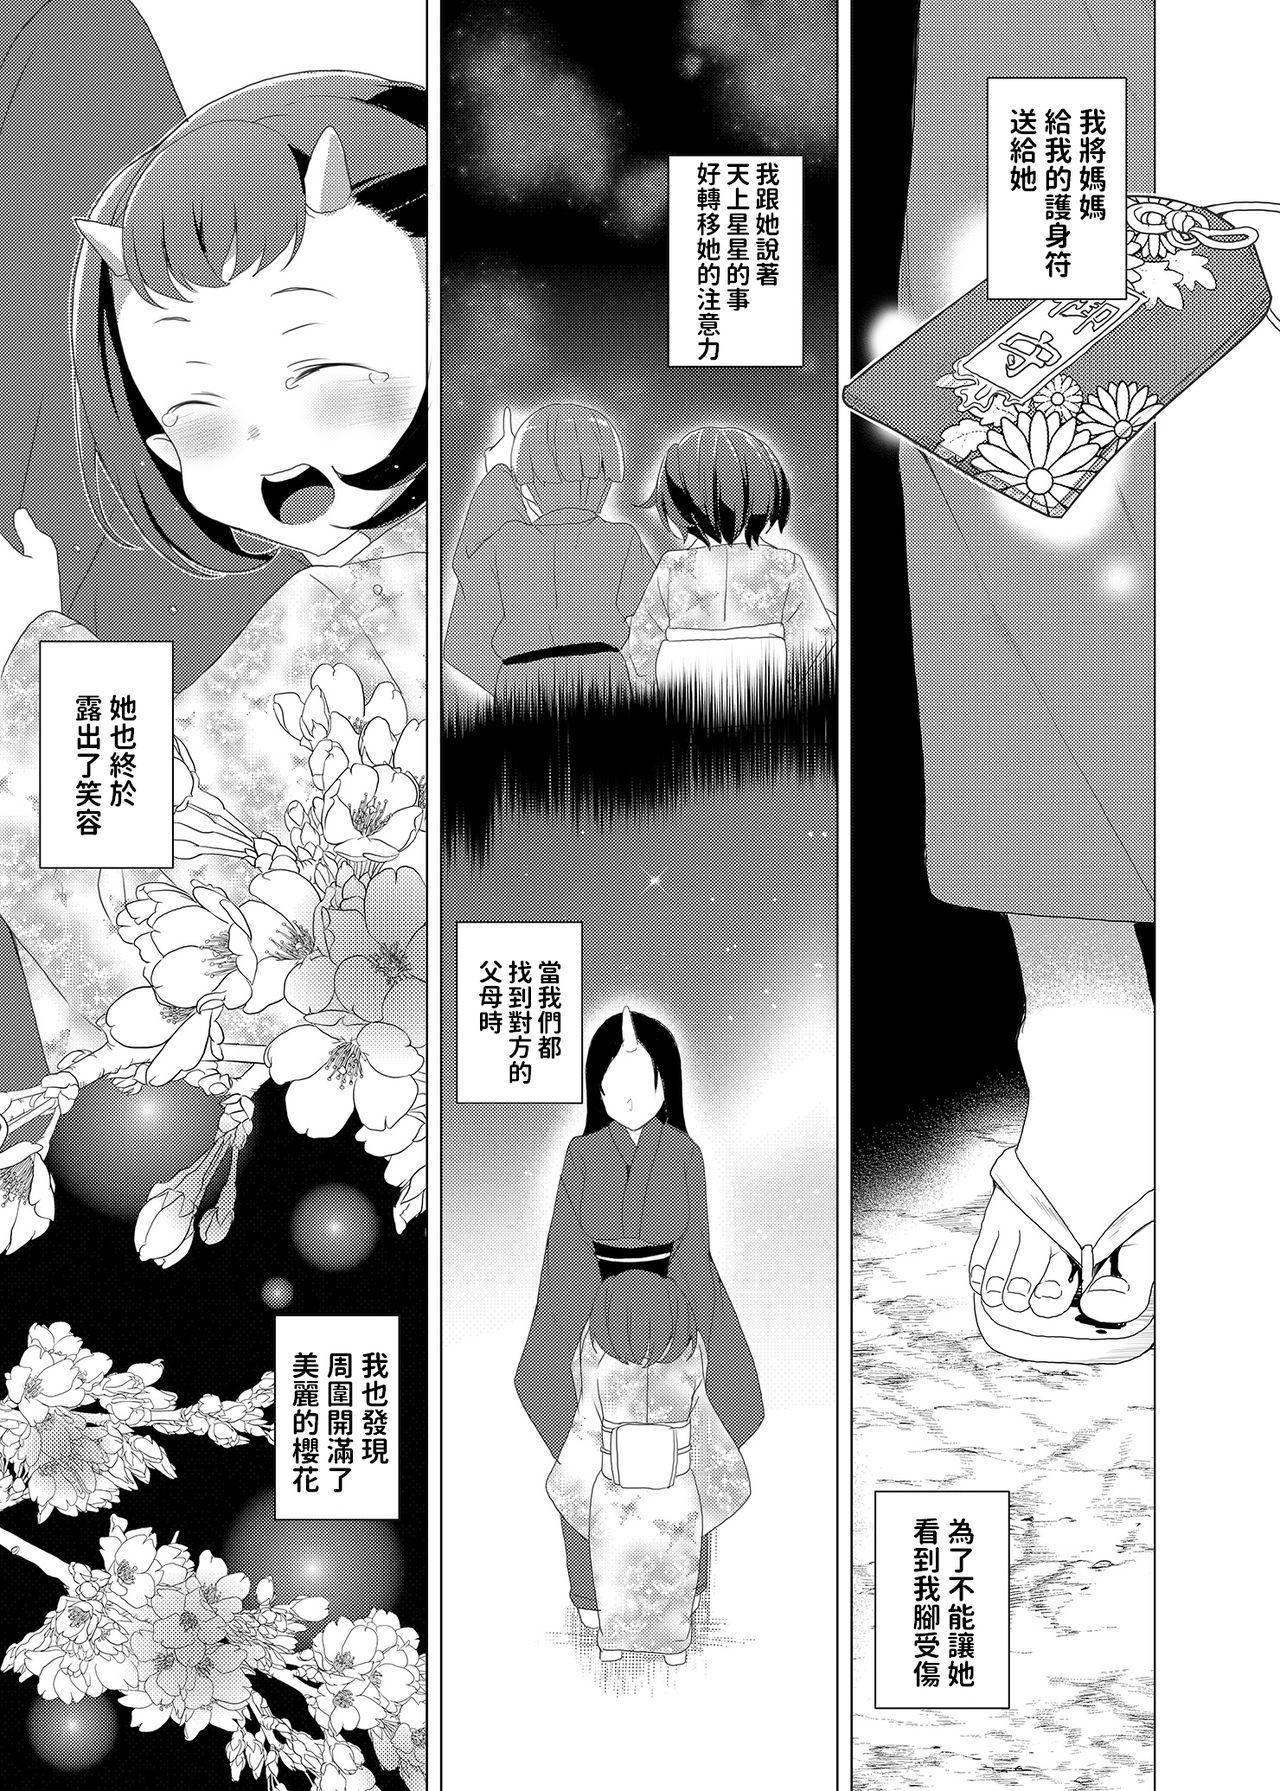 Twinkstudios Boku to Kimi ga Sugosu Haru - Original Letsdoeit - Page 4